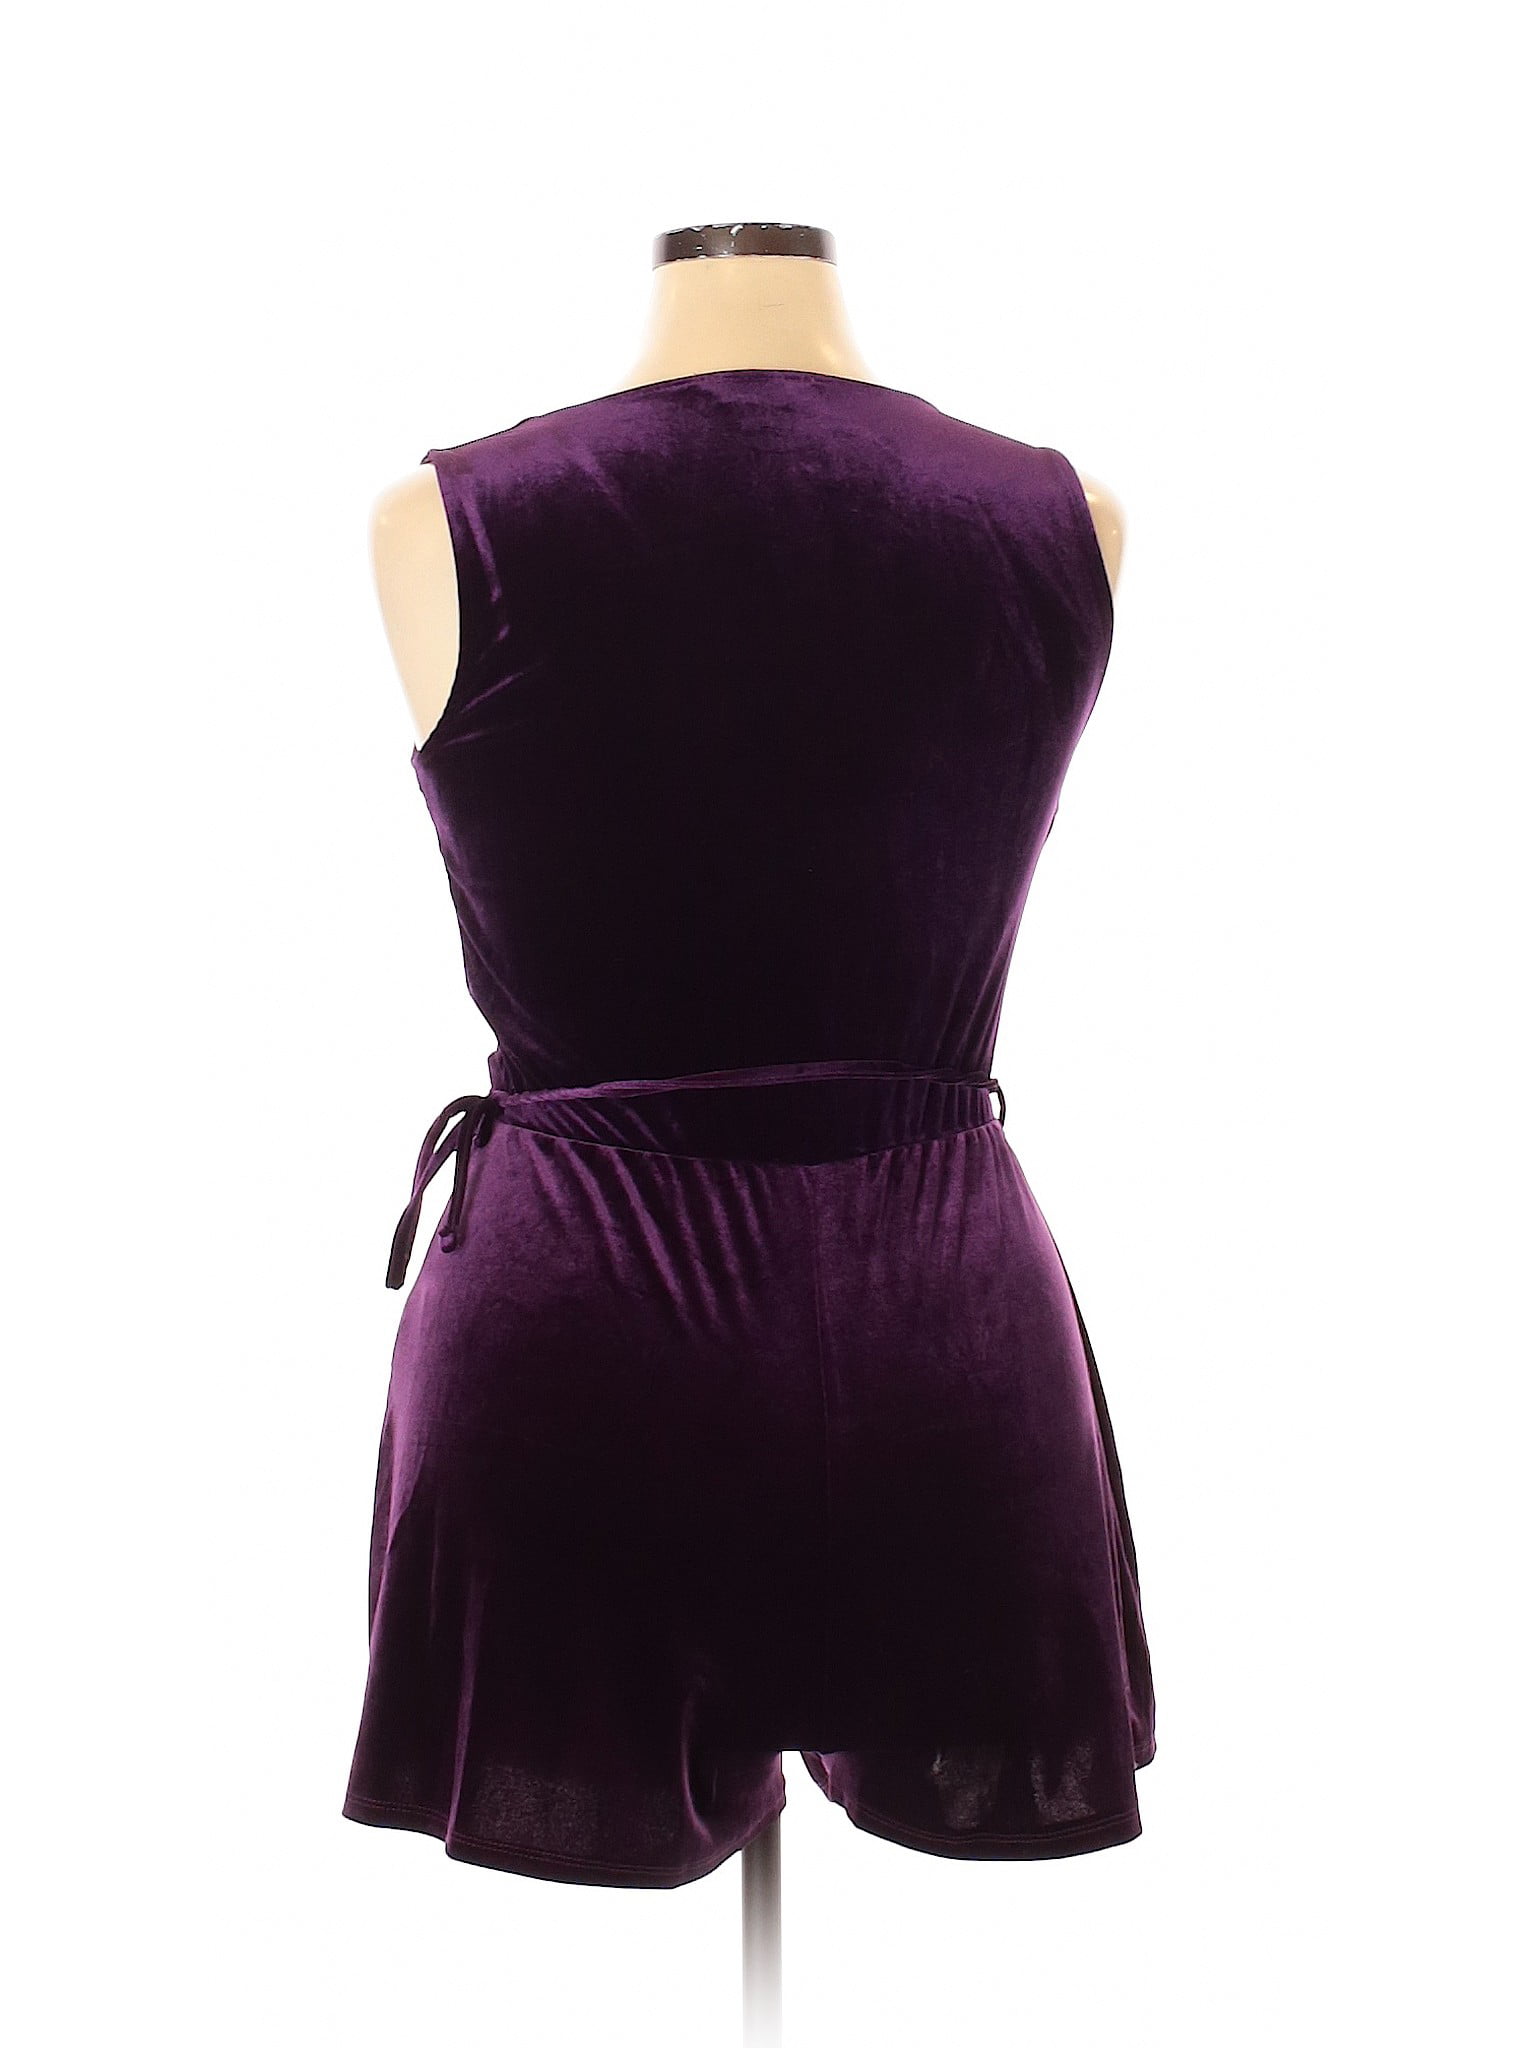 MISS SELFRIDGE Check Shirt Dress size 12 Brand New